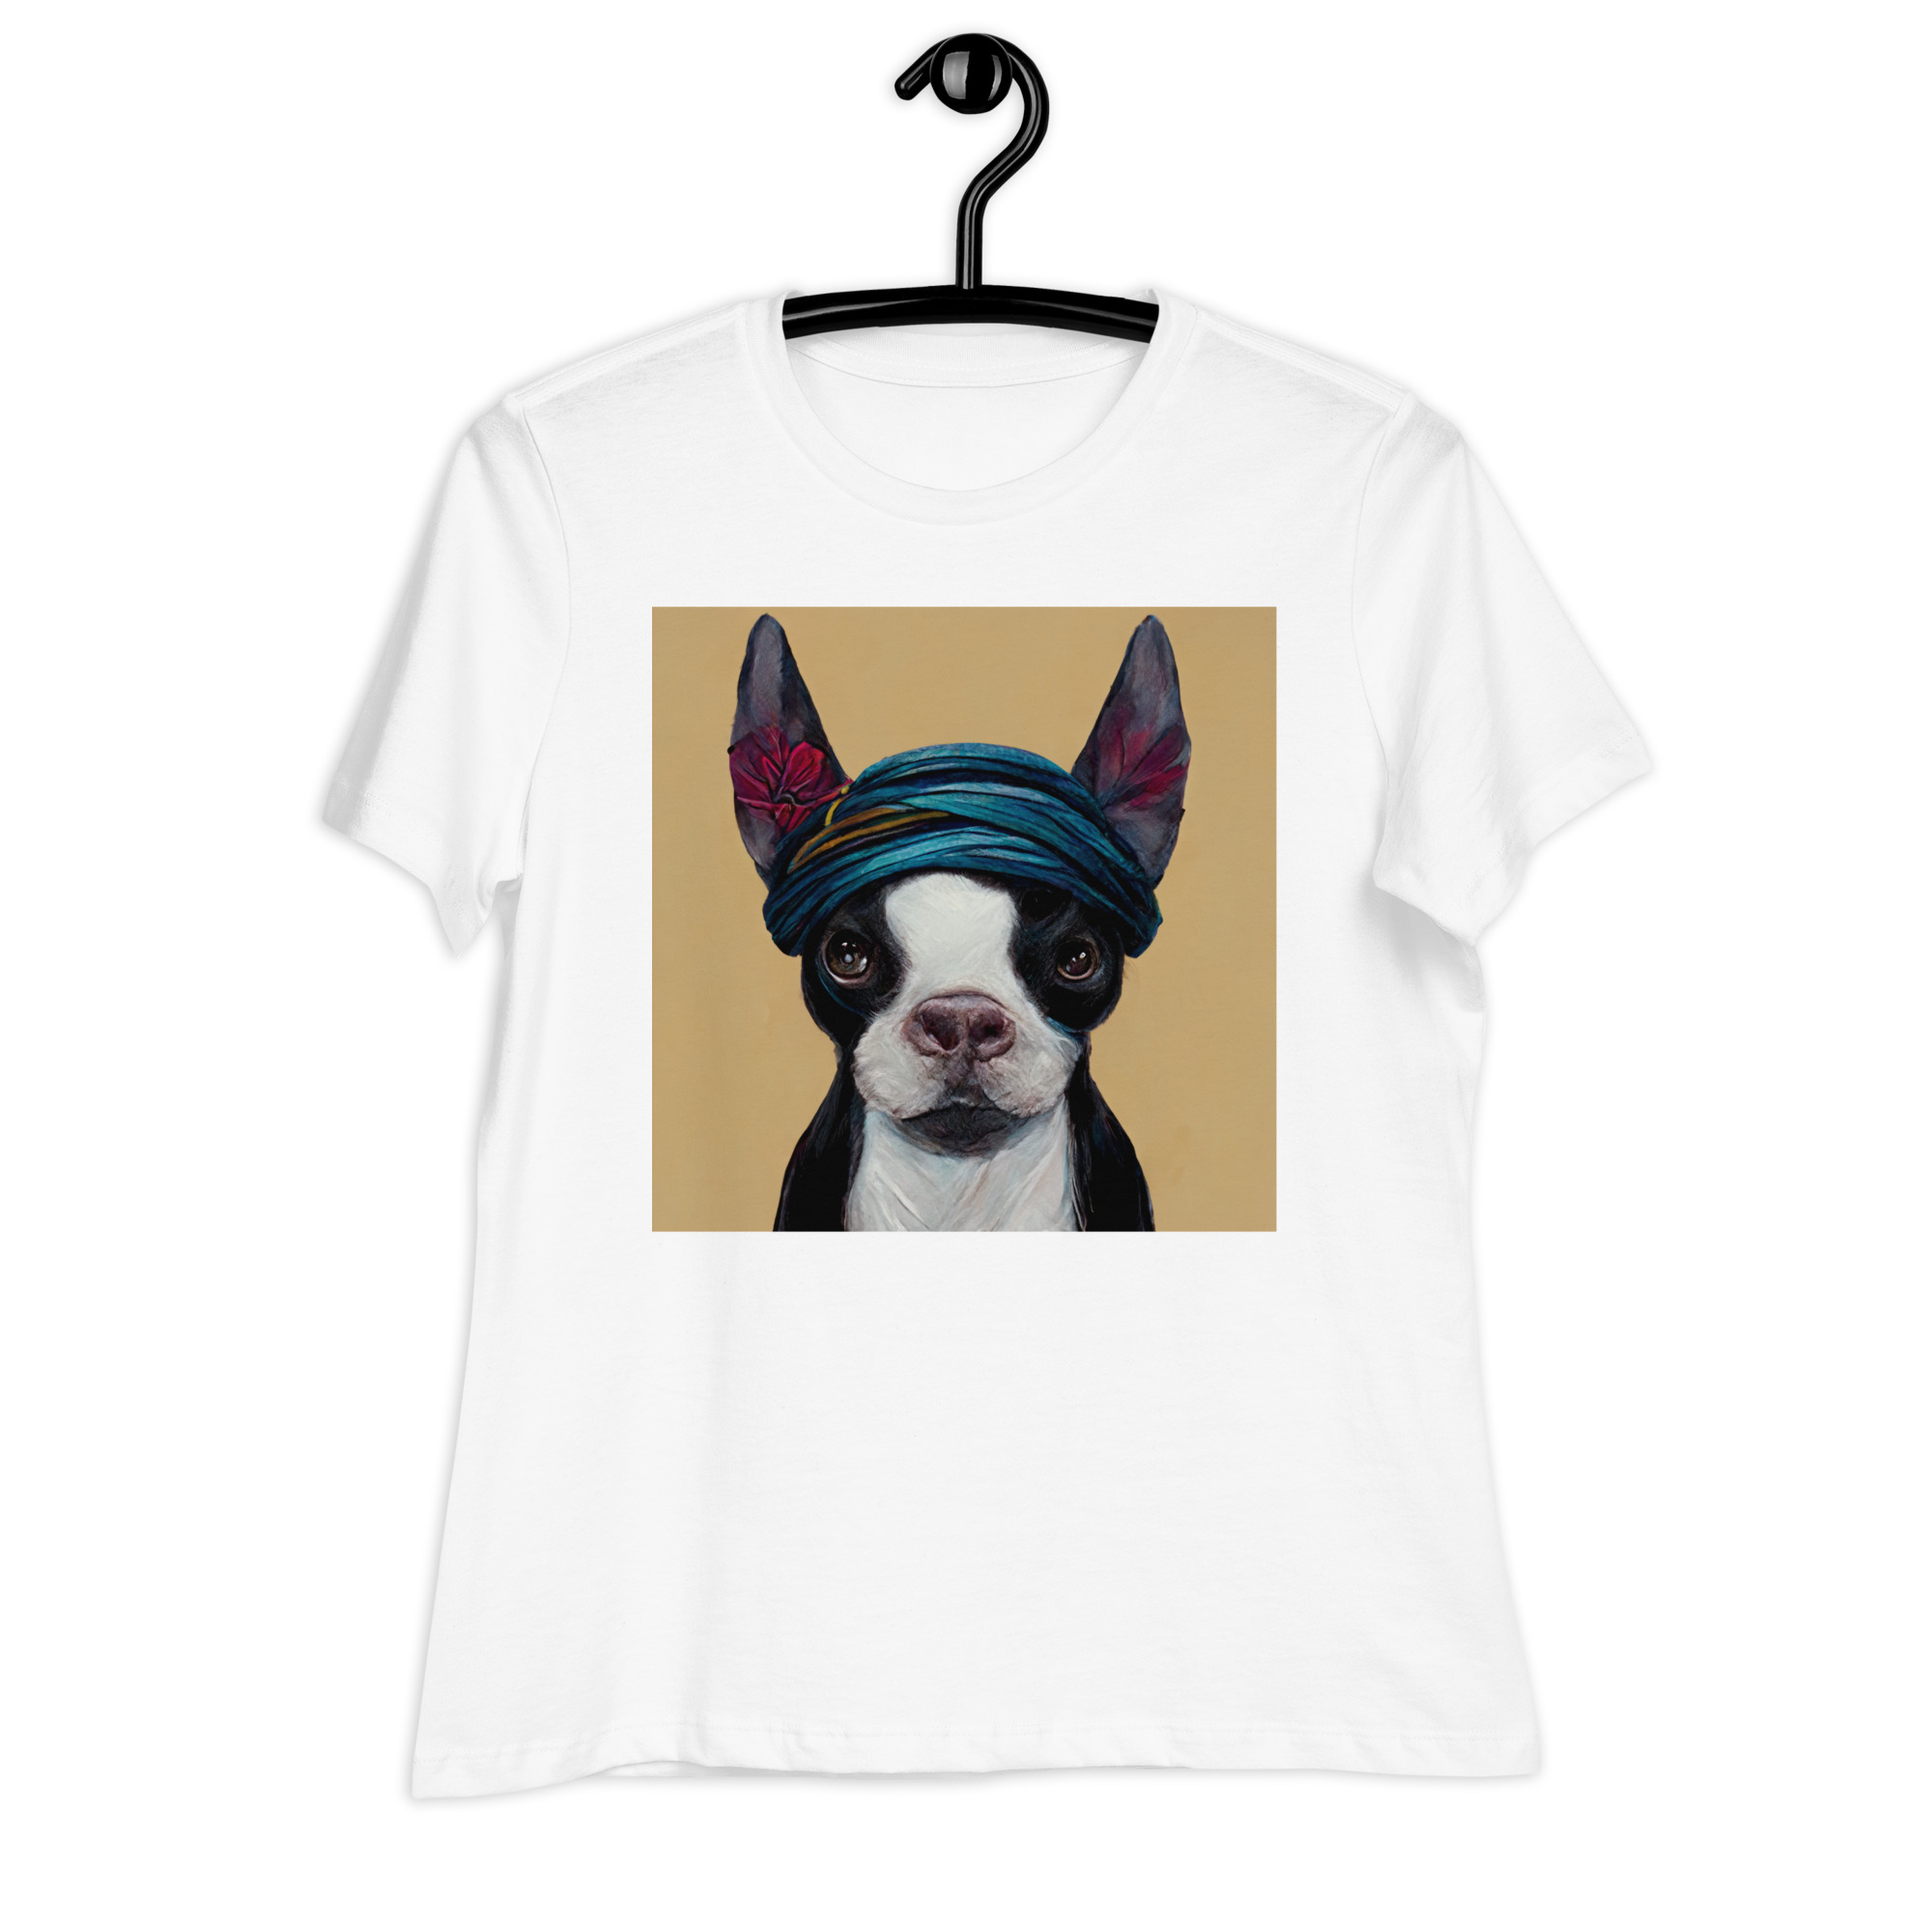 Decorative t-shirt with distinct Boston Terrier design